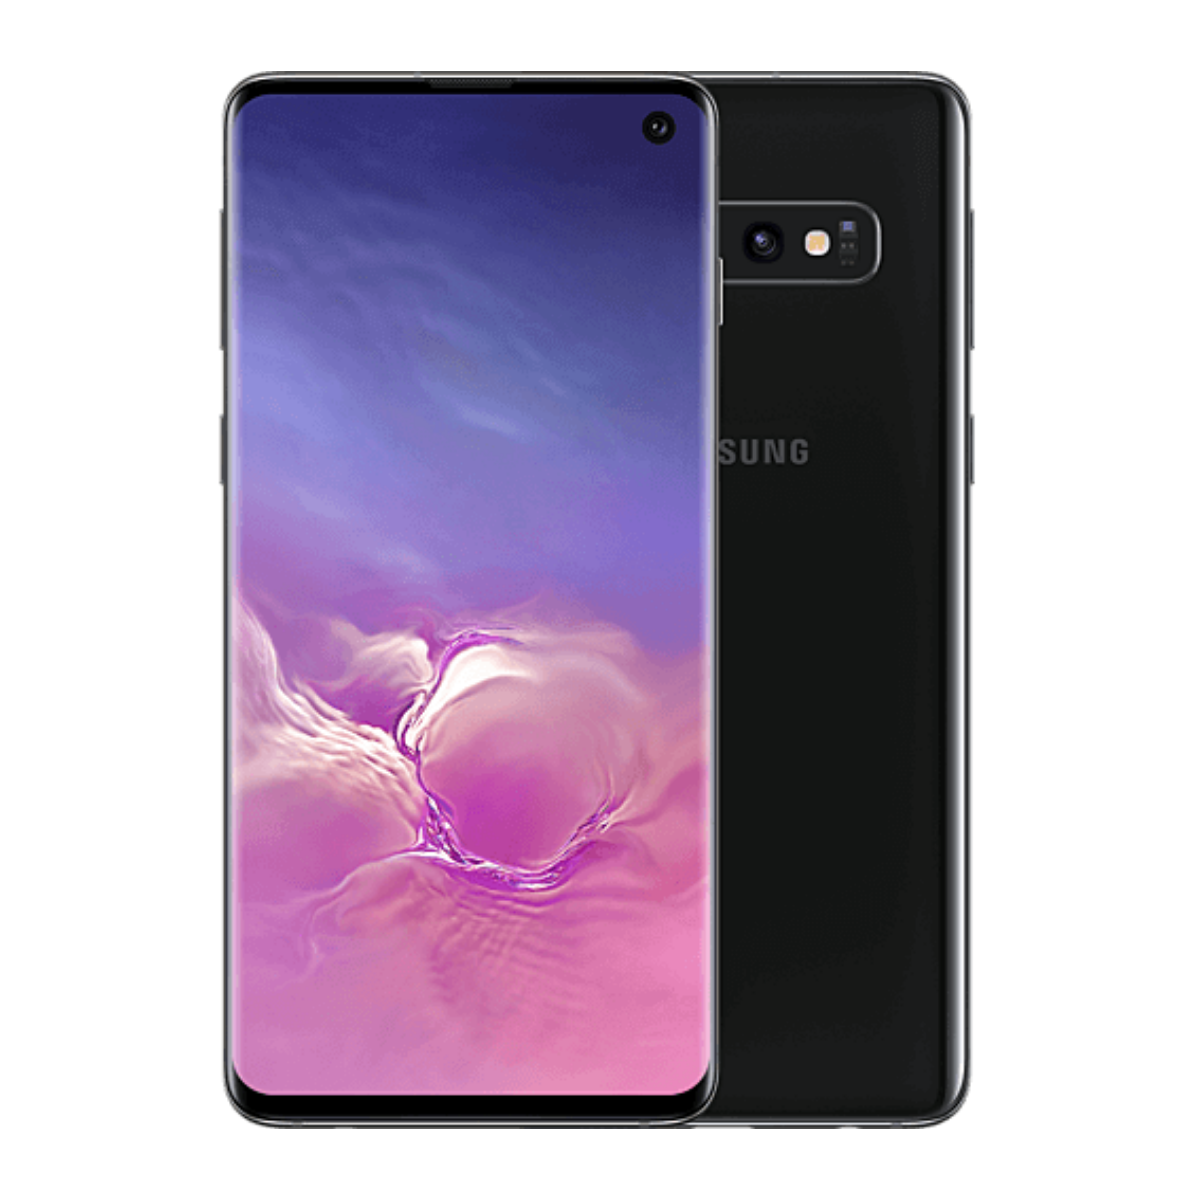 Sim Free Samsung Galaxy S10 128GB Unlocked Mobile Phone - Prism Black